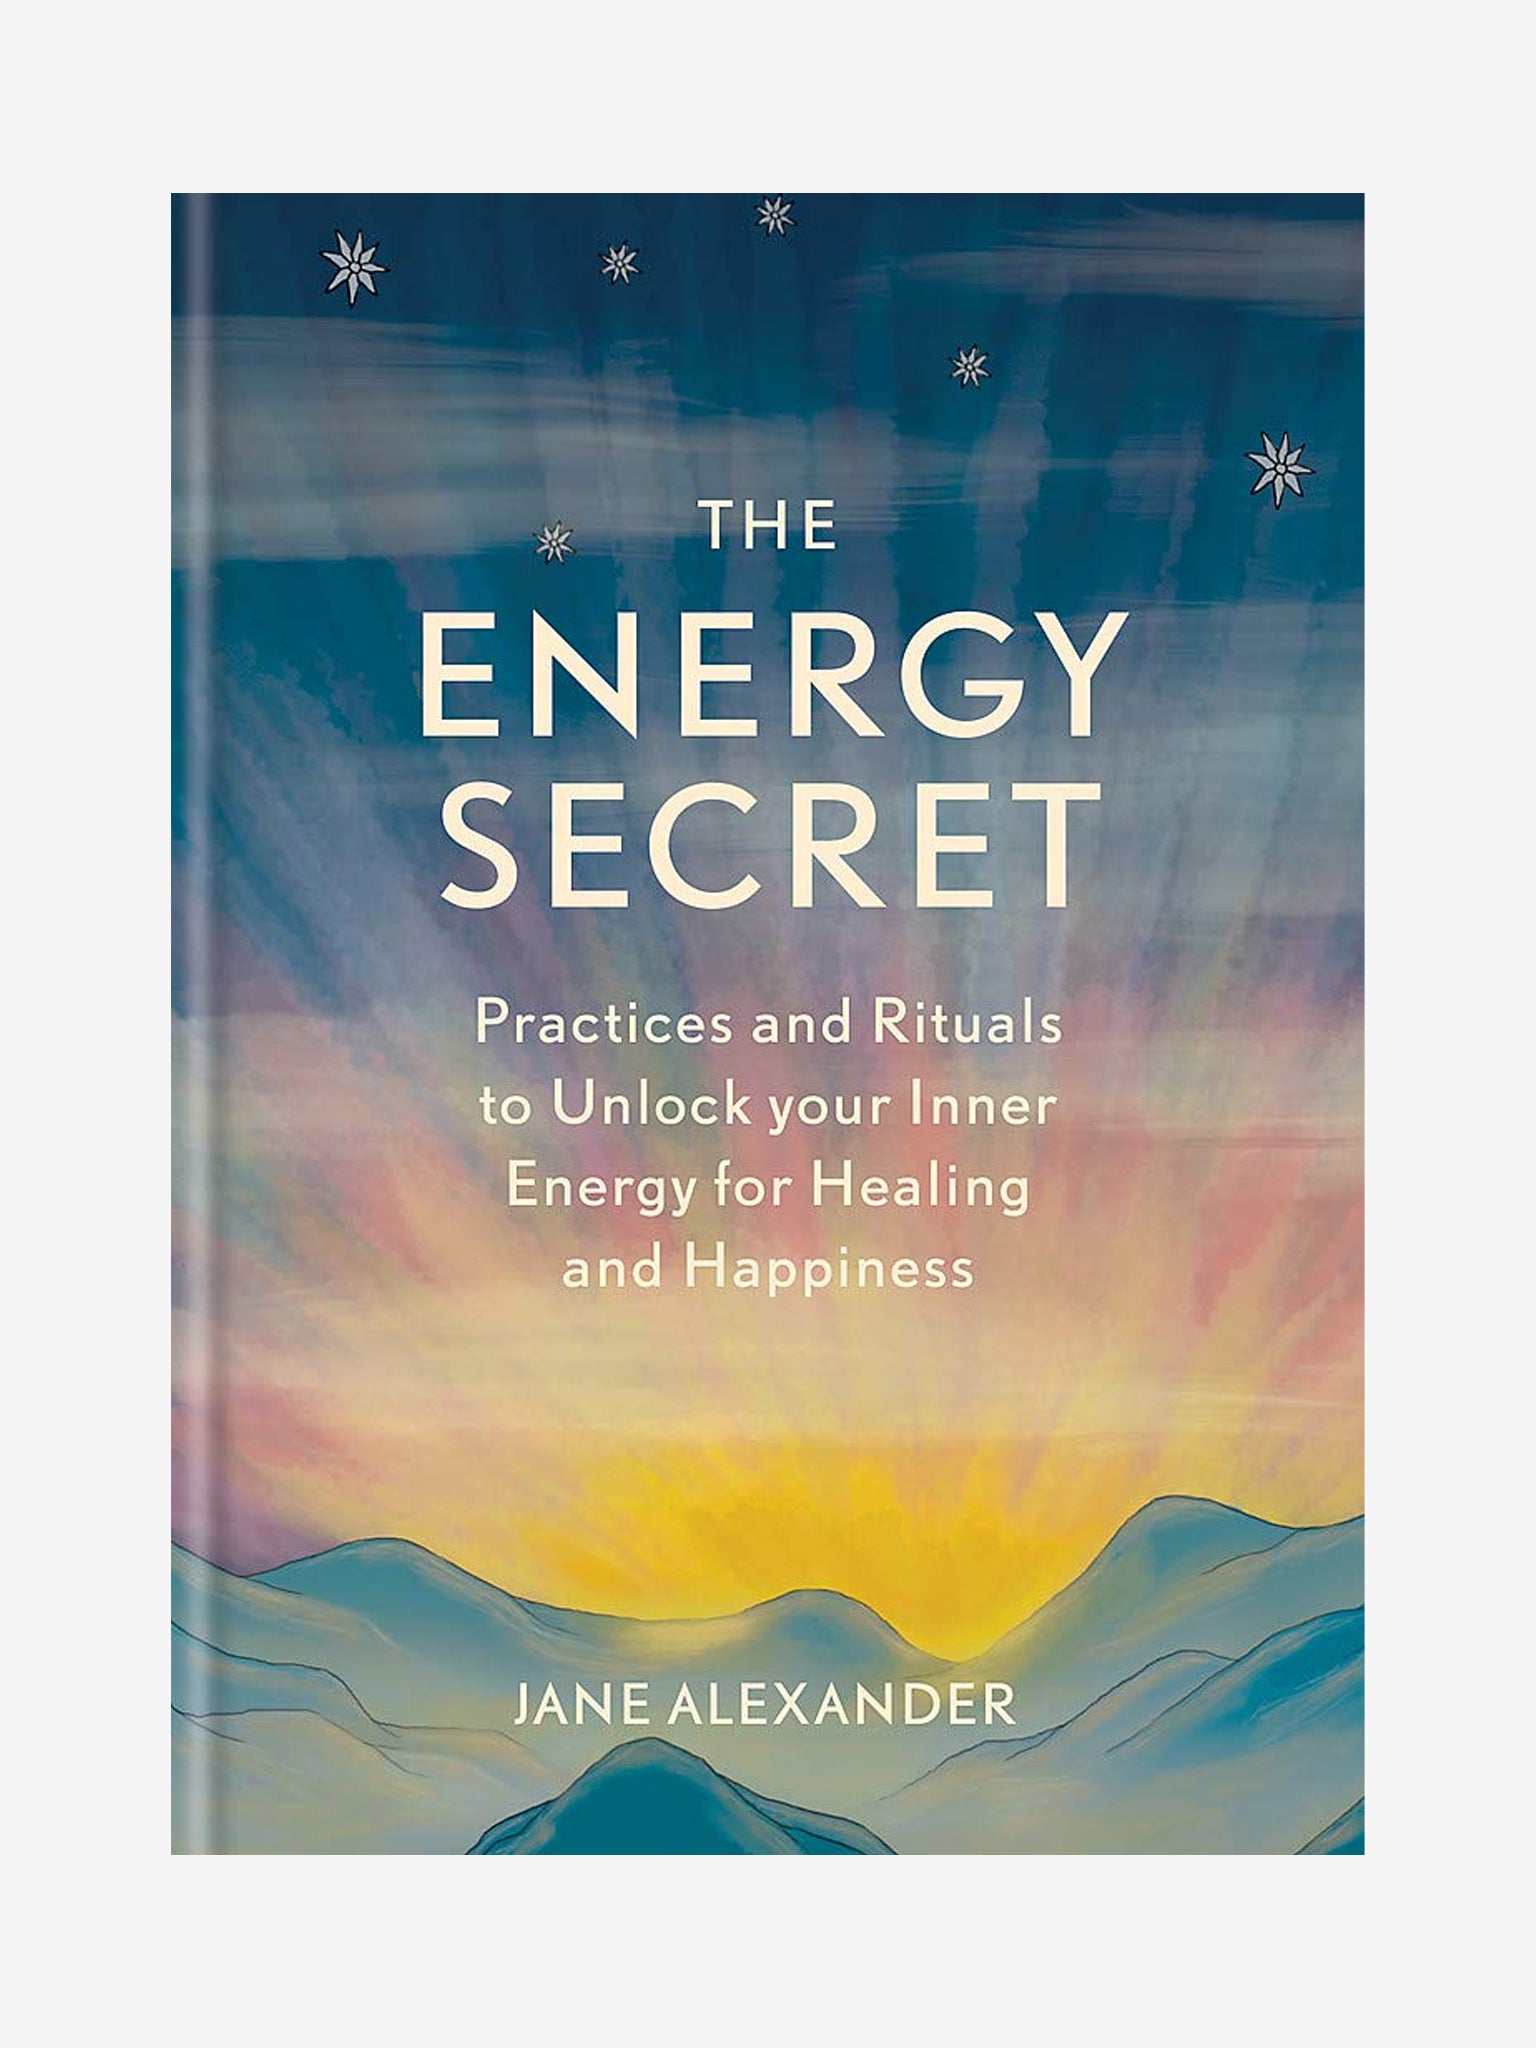 The Energy Secret